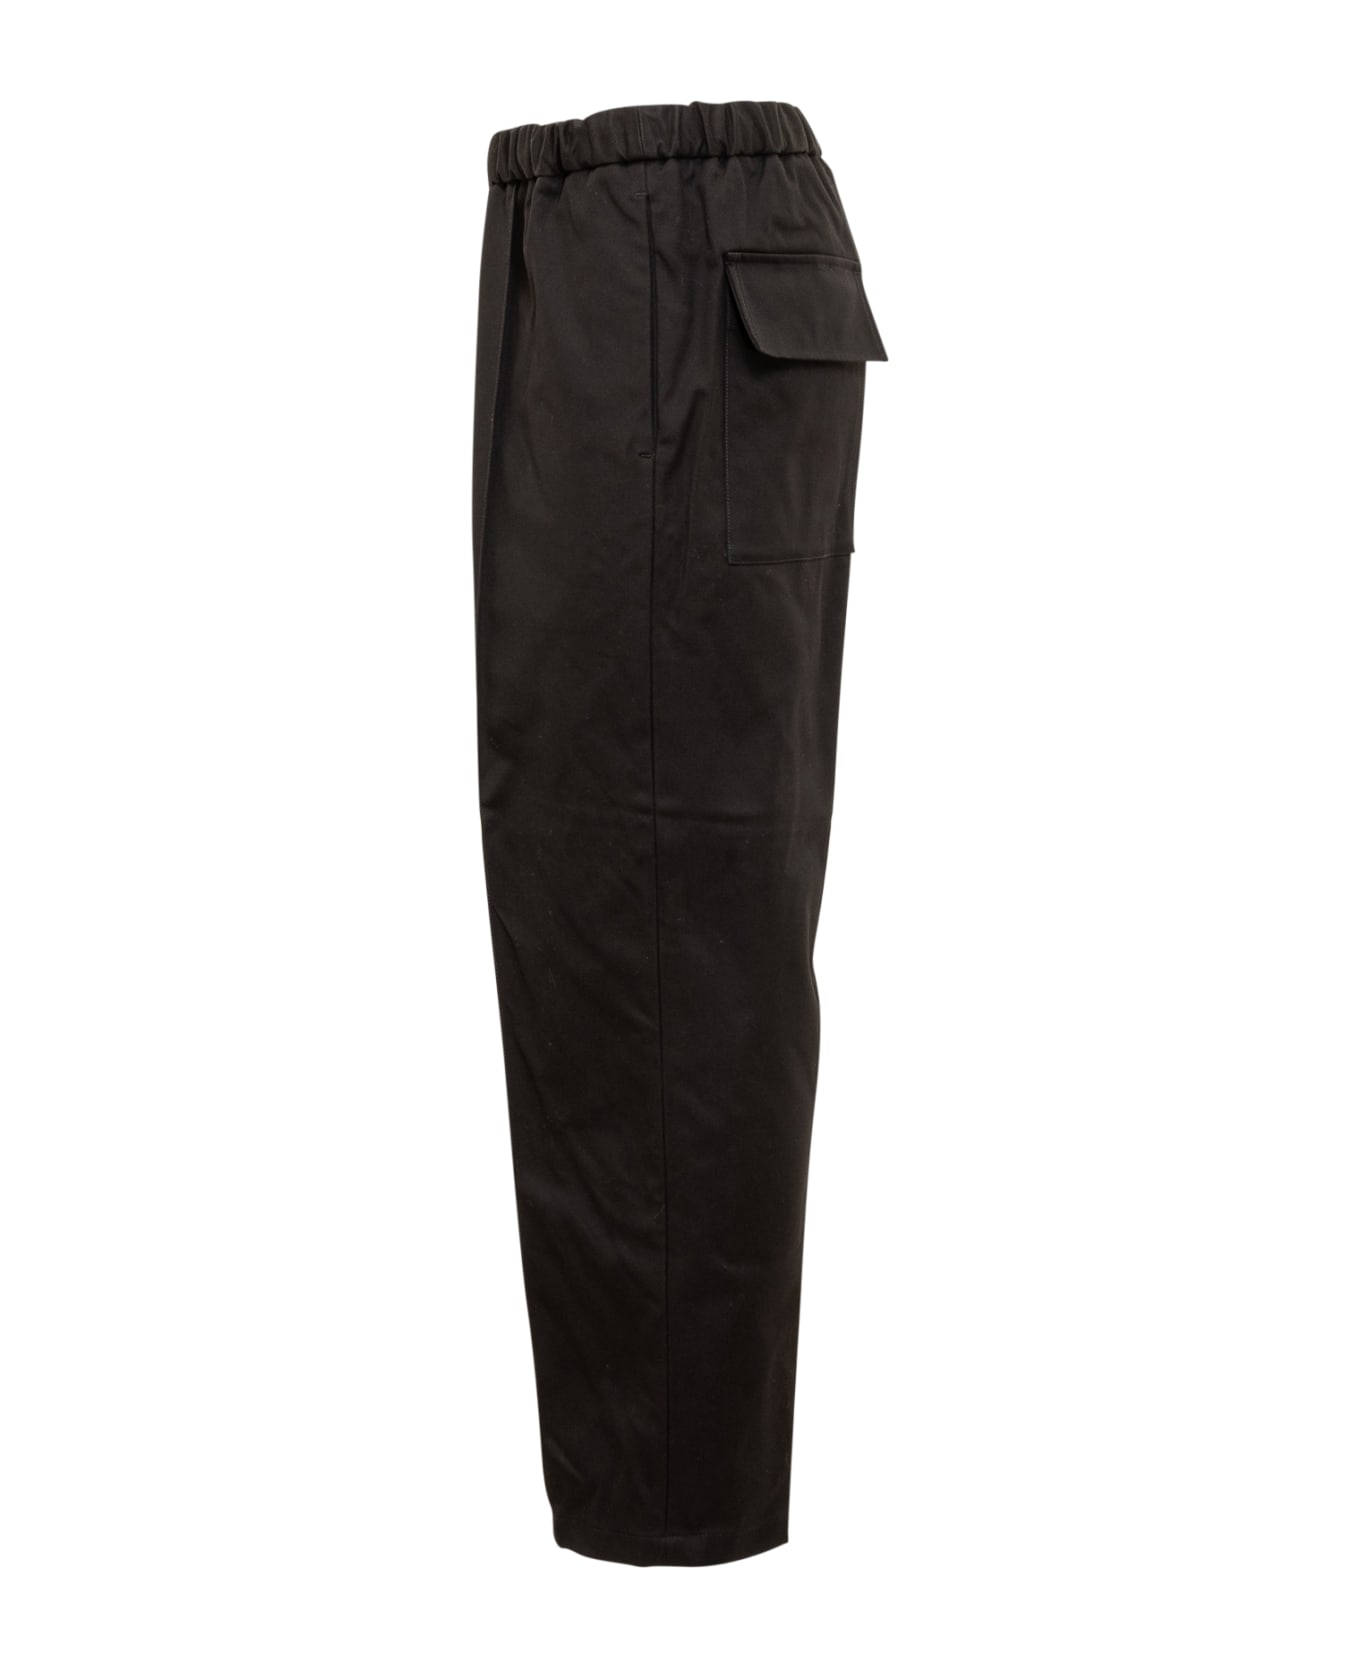 Jil Sander D 09 Aw 20 Trousers - BLACK ボトムス